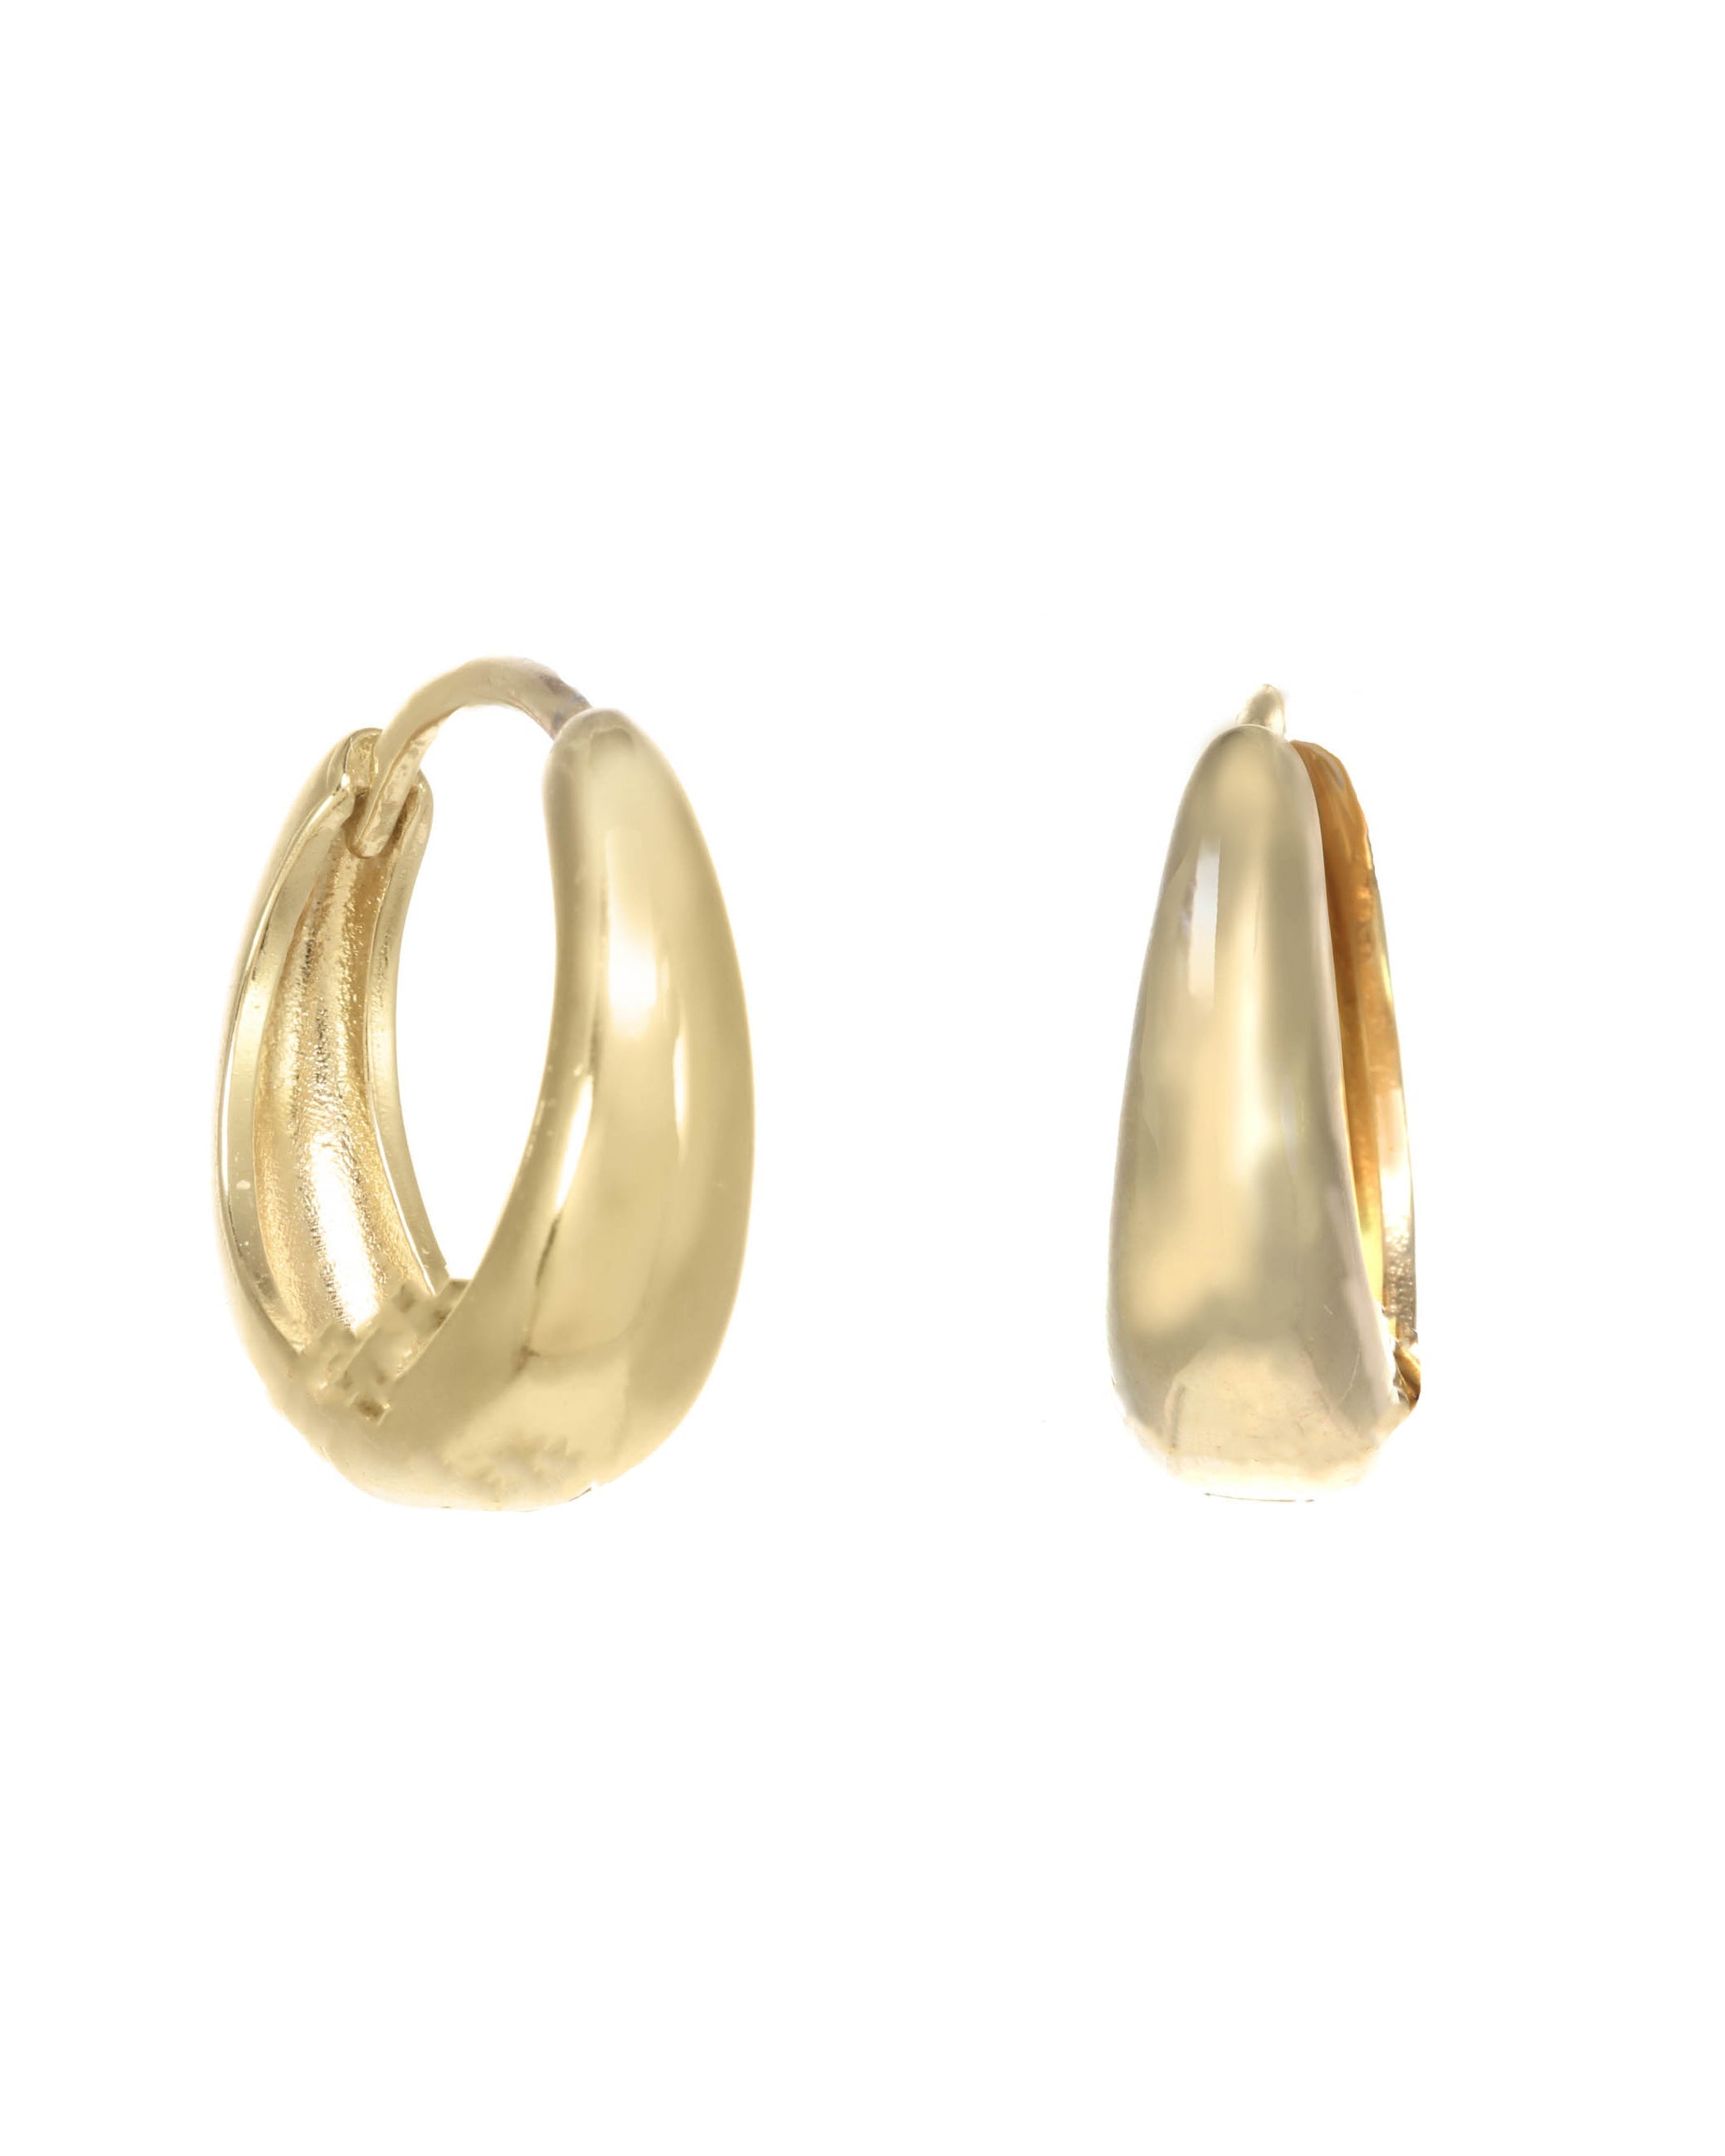 Mavis Hoop Earrings